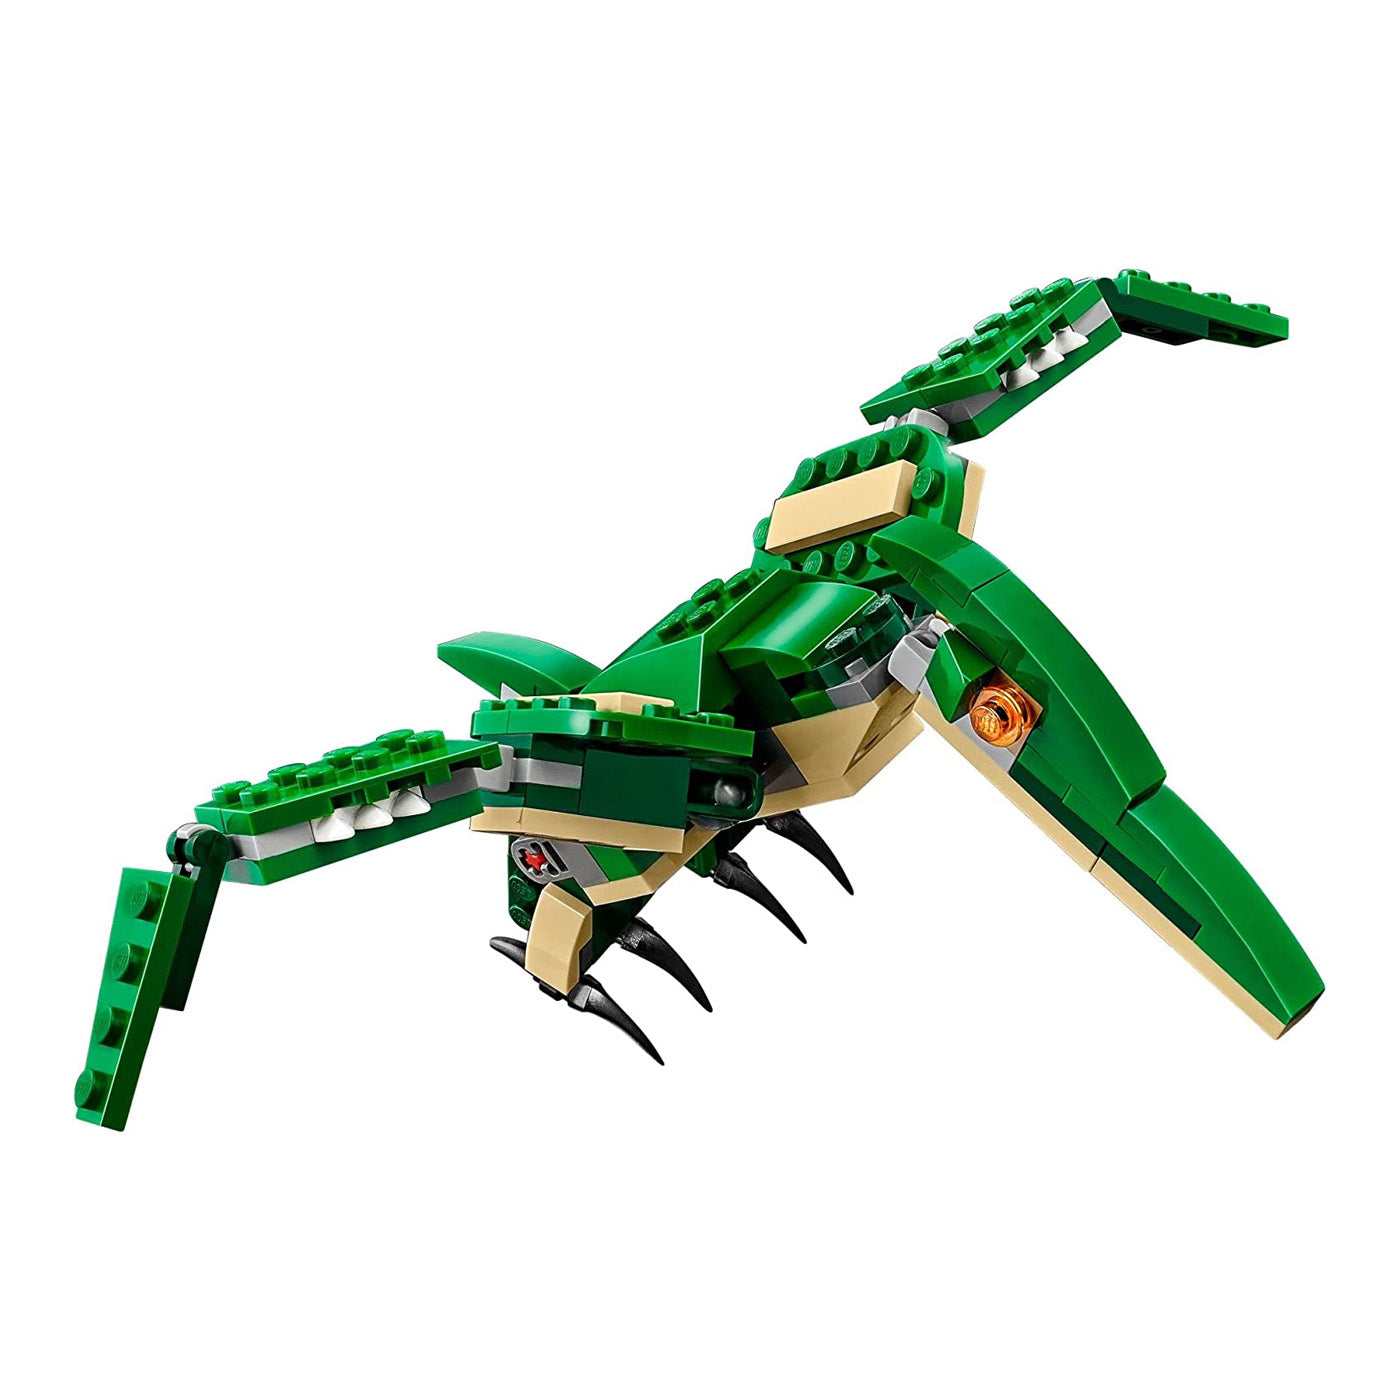 LEGO Creator: Mighty Dinosaurs Set 31058